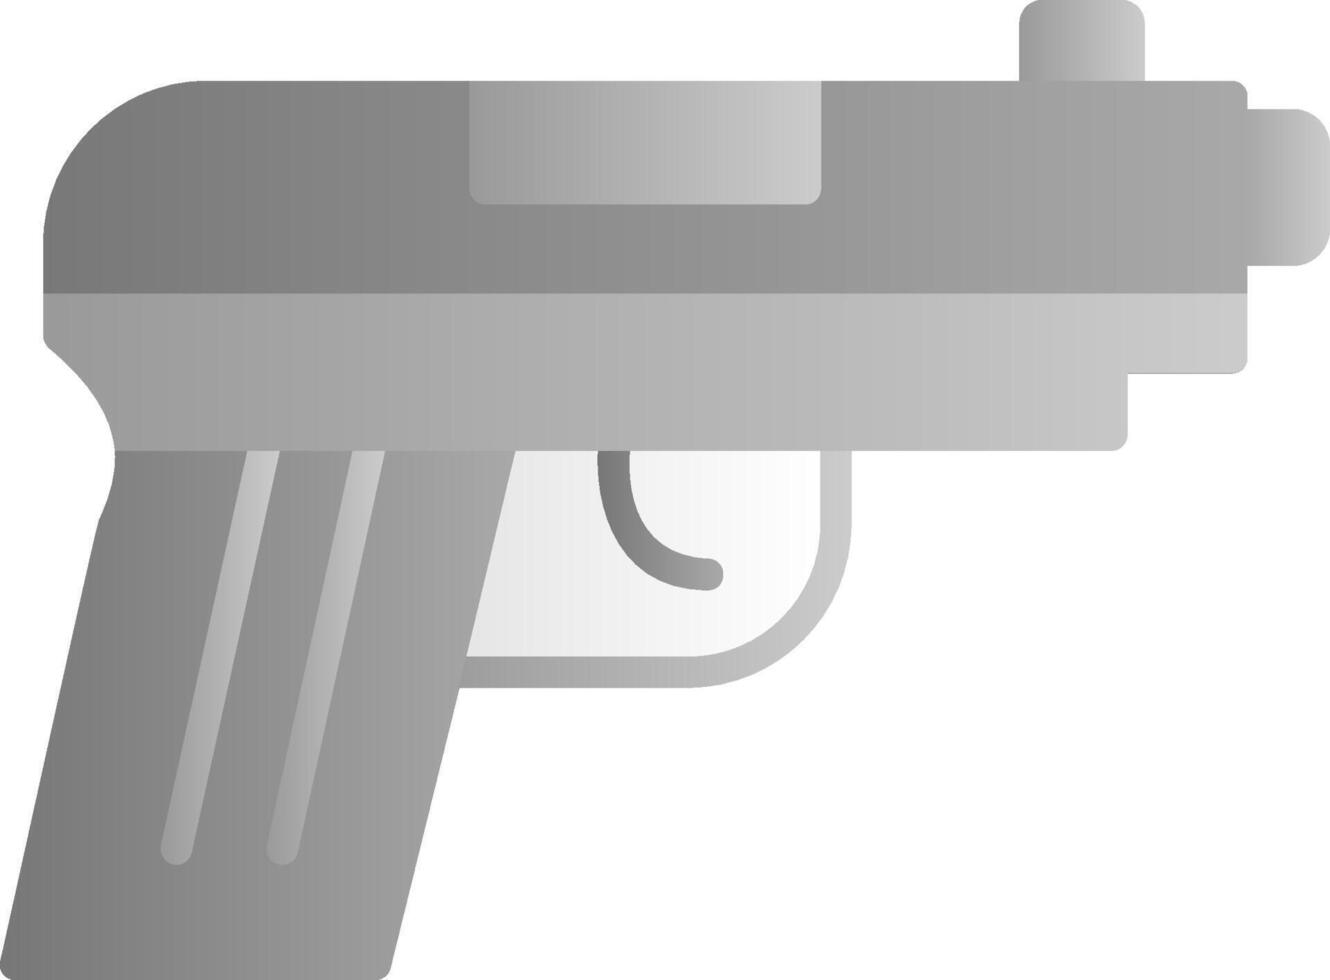 Pistol Gun Vector Icon